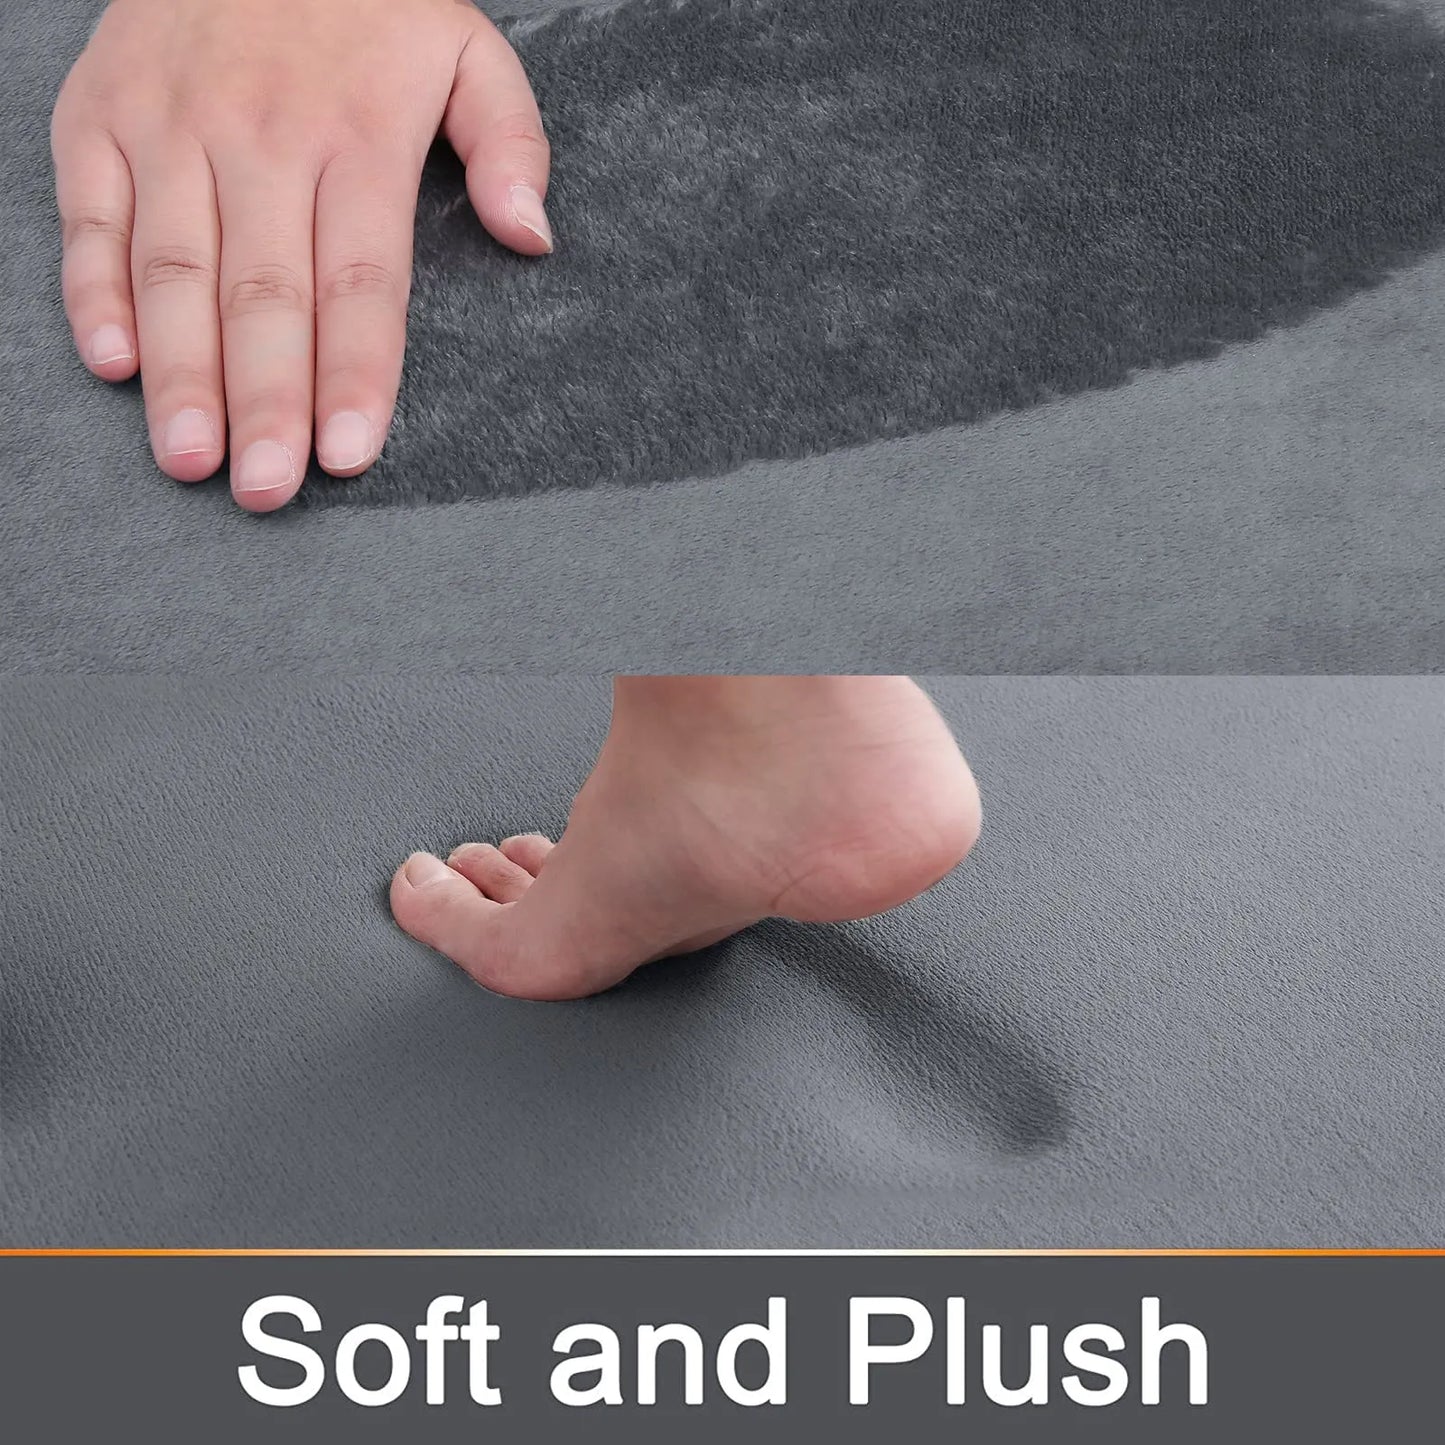 Cloud-Soft Comfort: Memory Foam Bath Mat